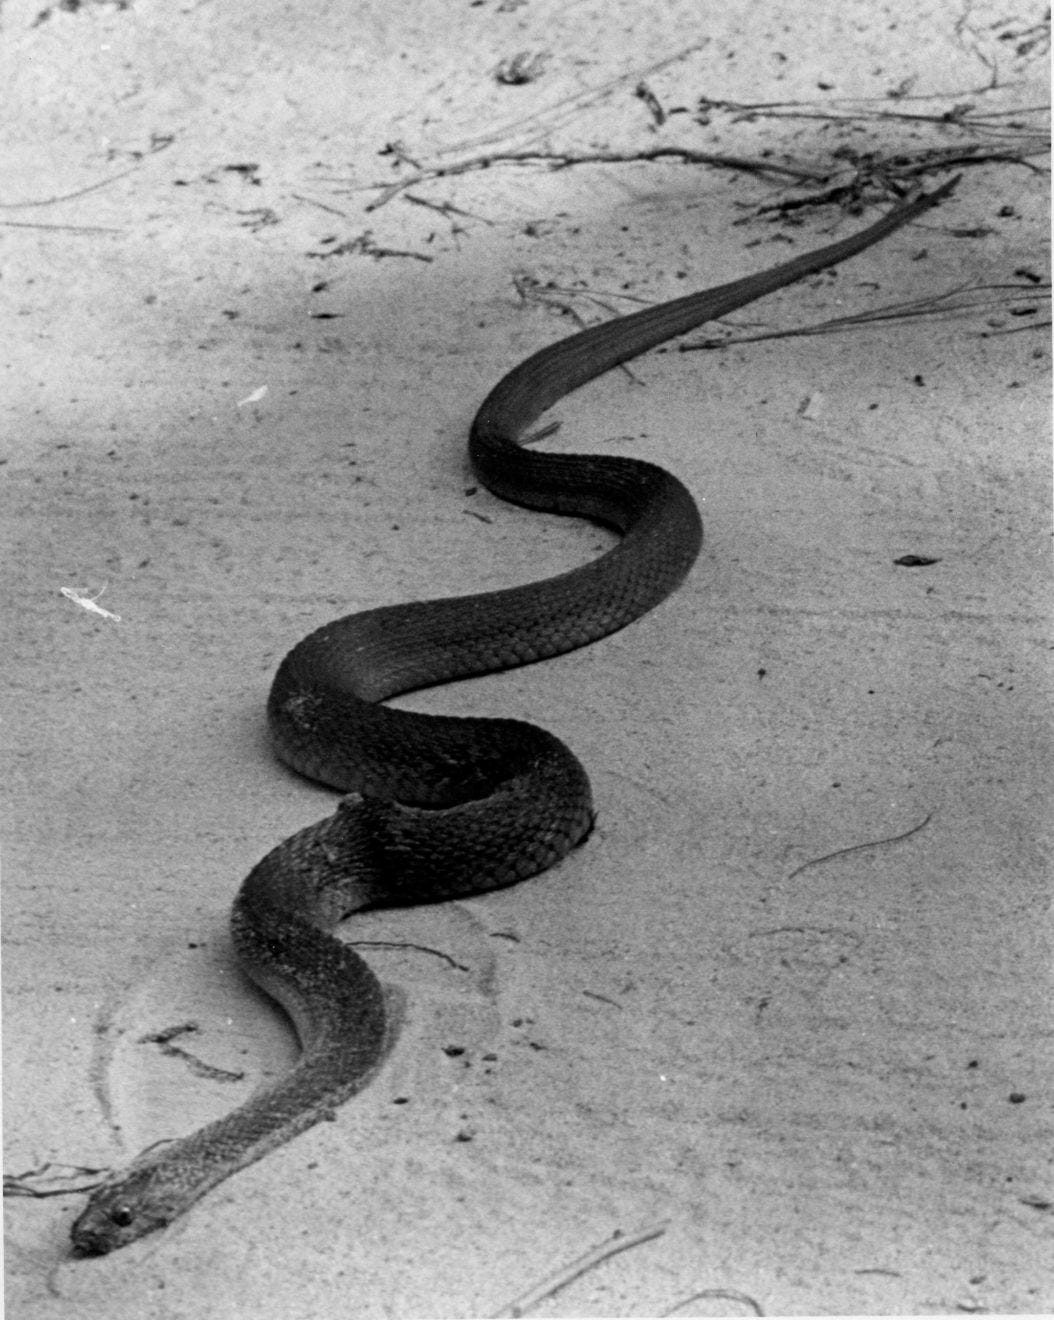 Venomous Snake Catcher, Cottonmouth - North Florida